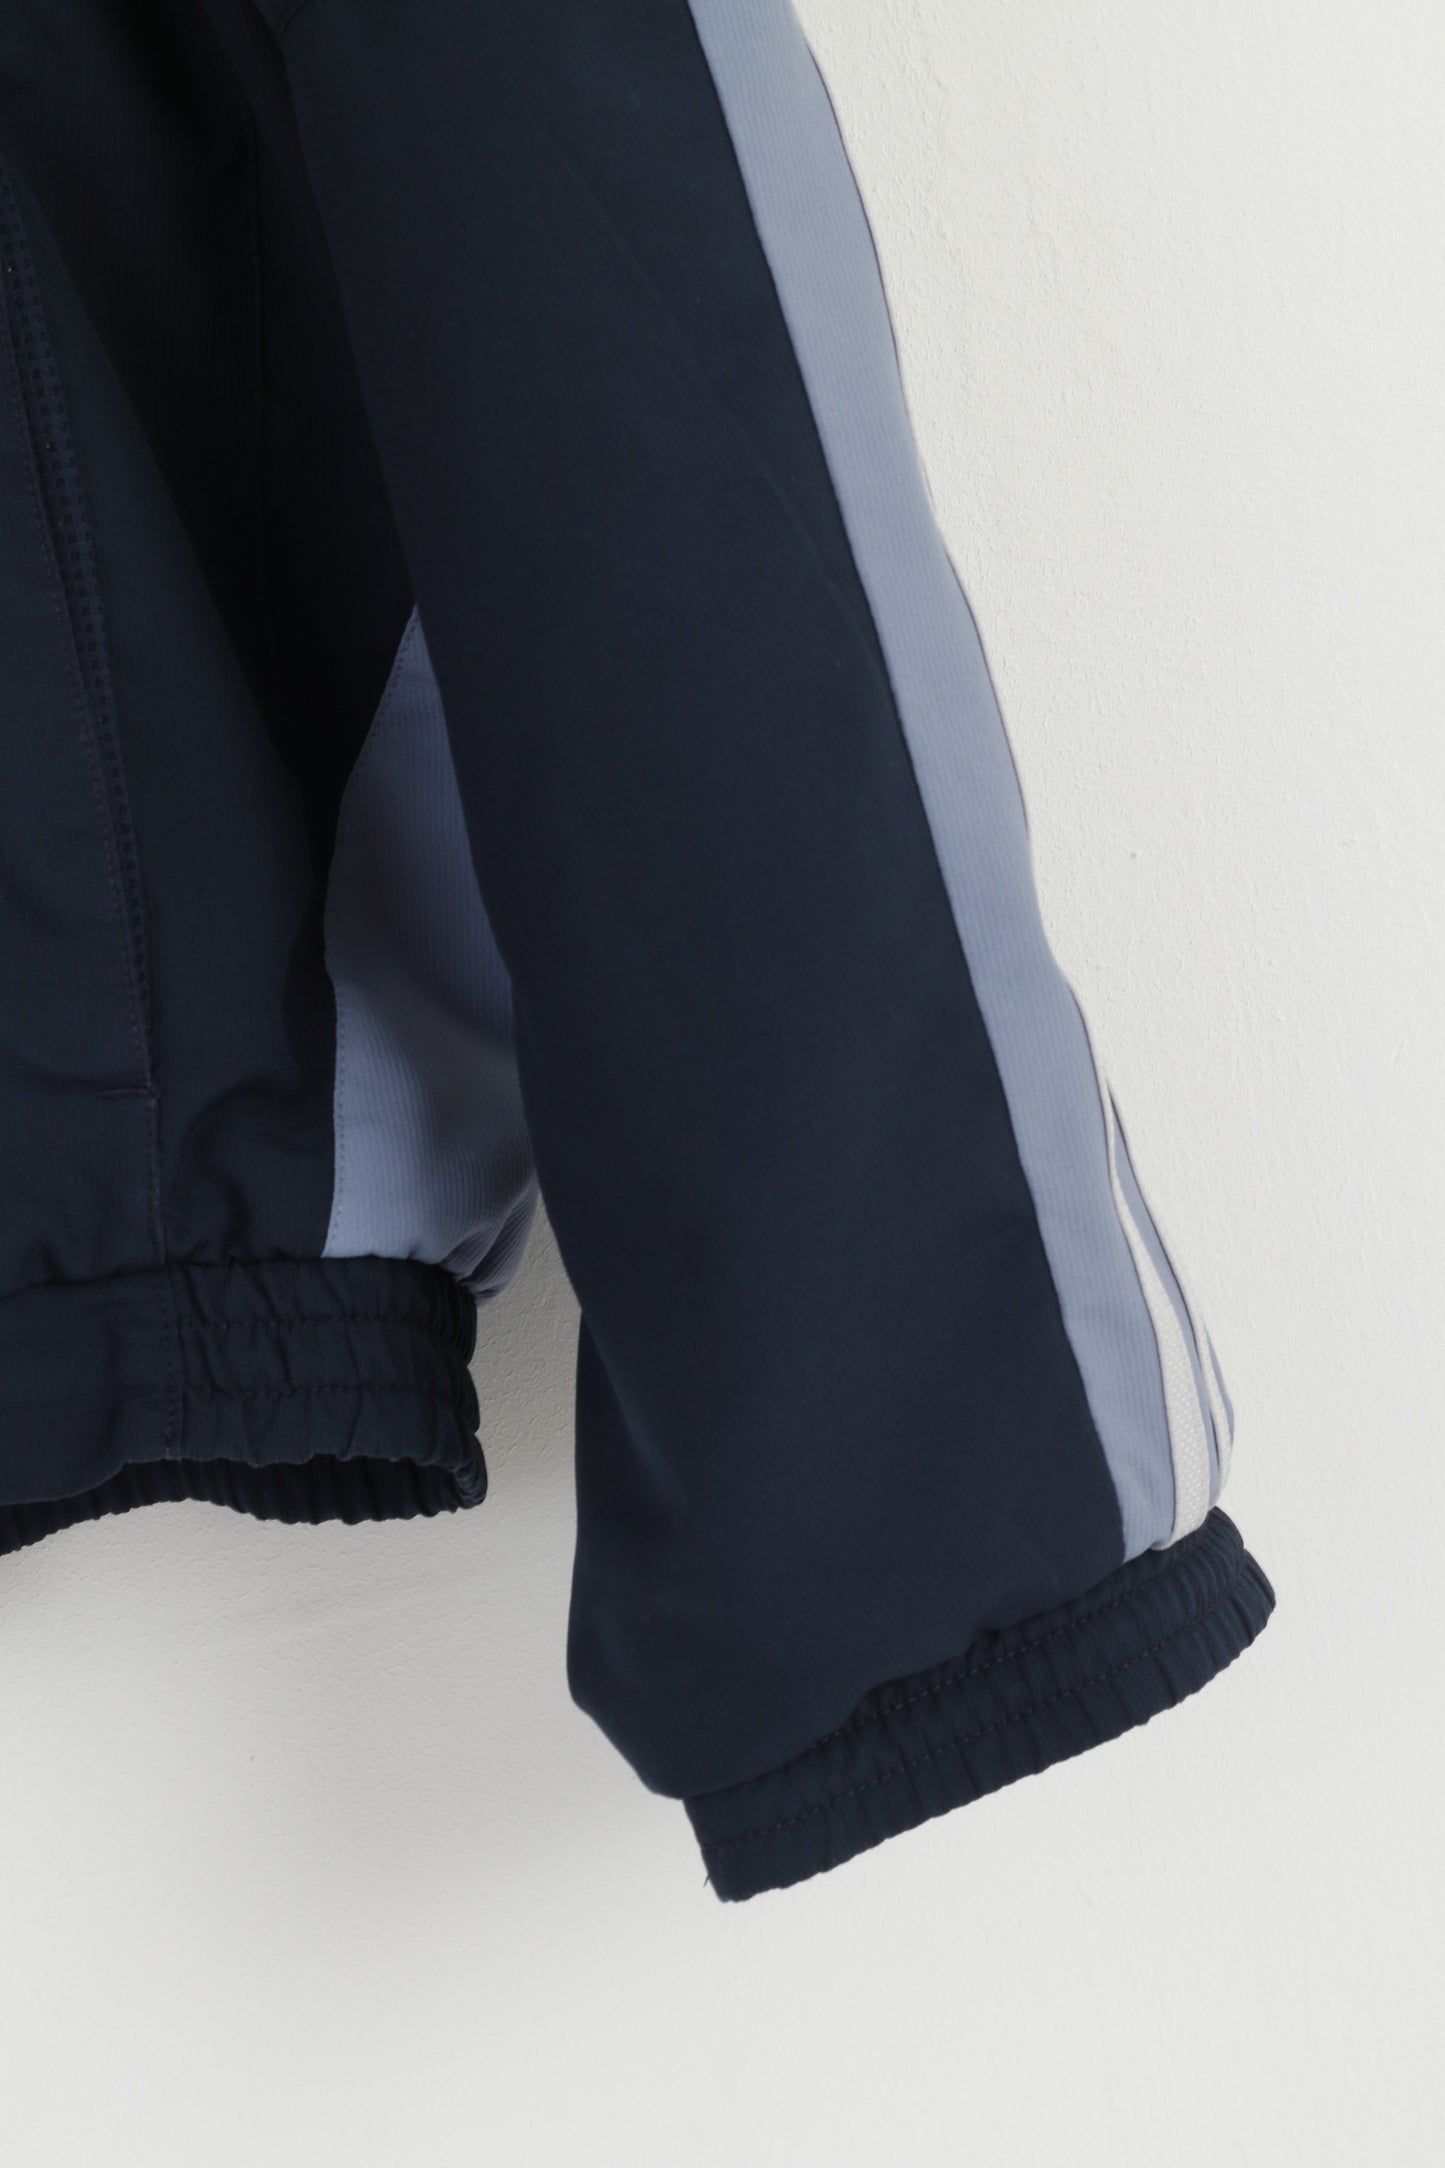 Adidas Hommes XL Veste Bleu Marine 3 Bandes Active Bomber Zip Up Traning Top